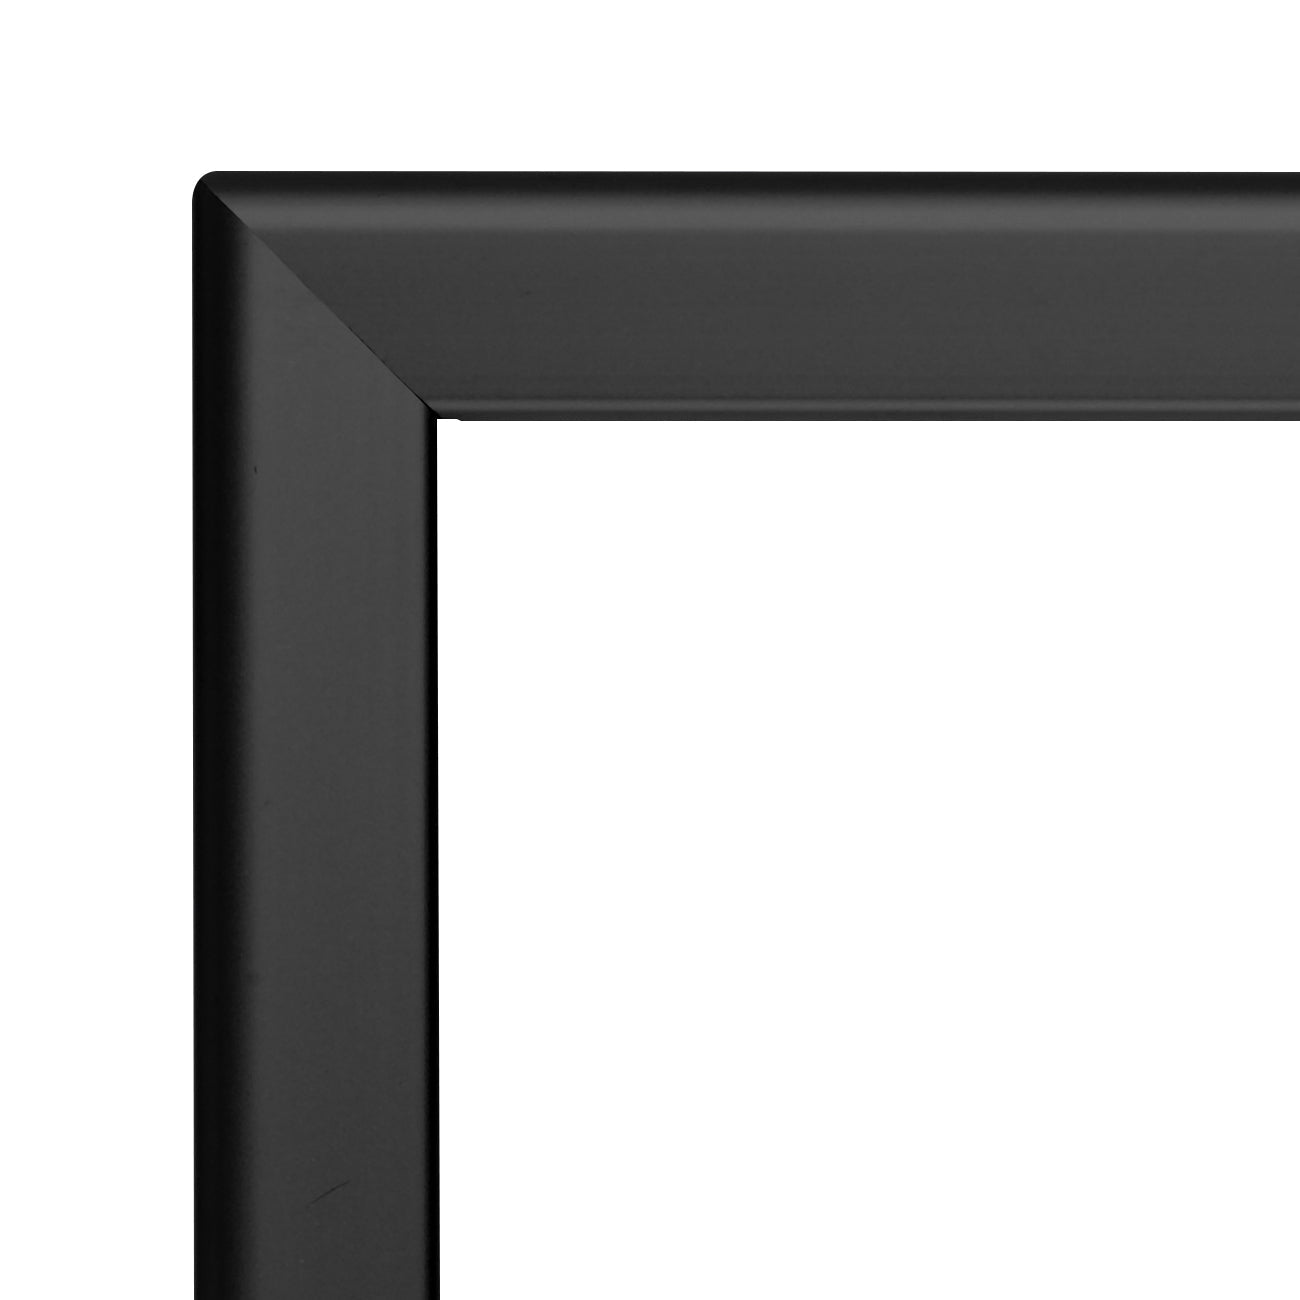 24x30 Black SnapeZo® Snap Frame - 1.25" Profile